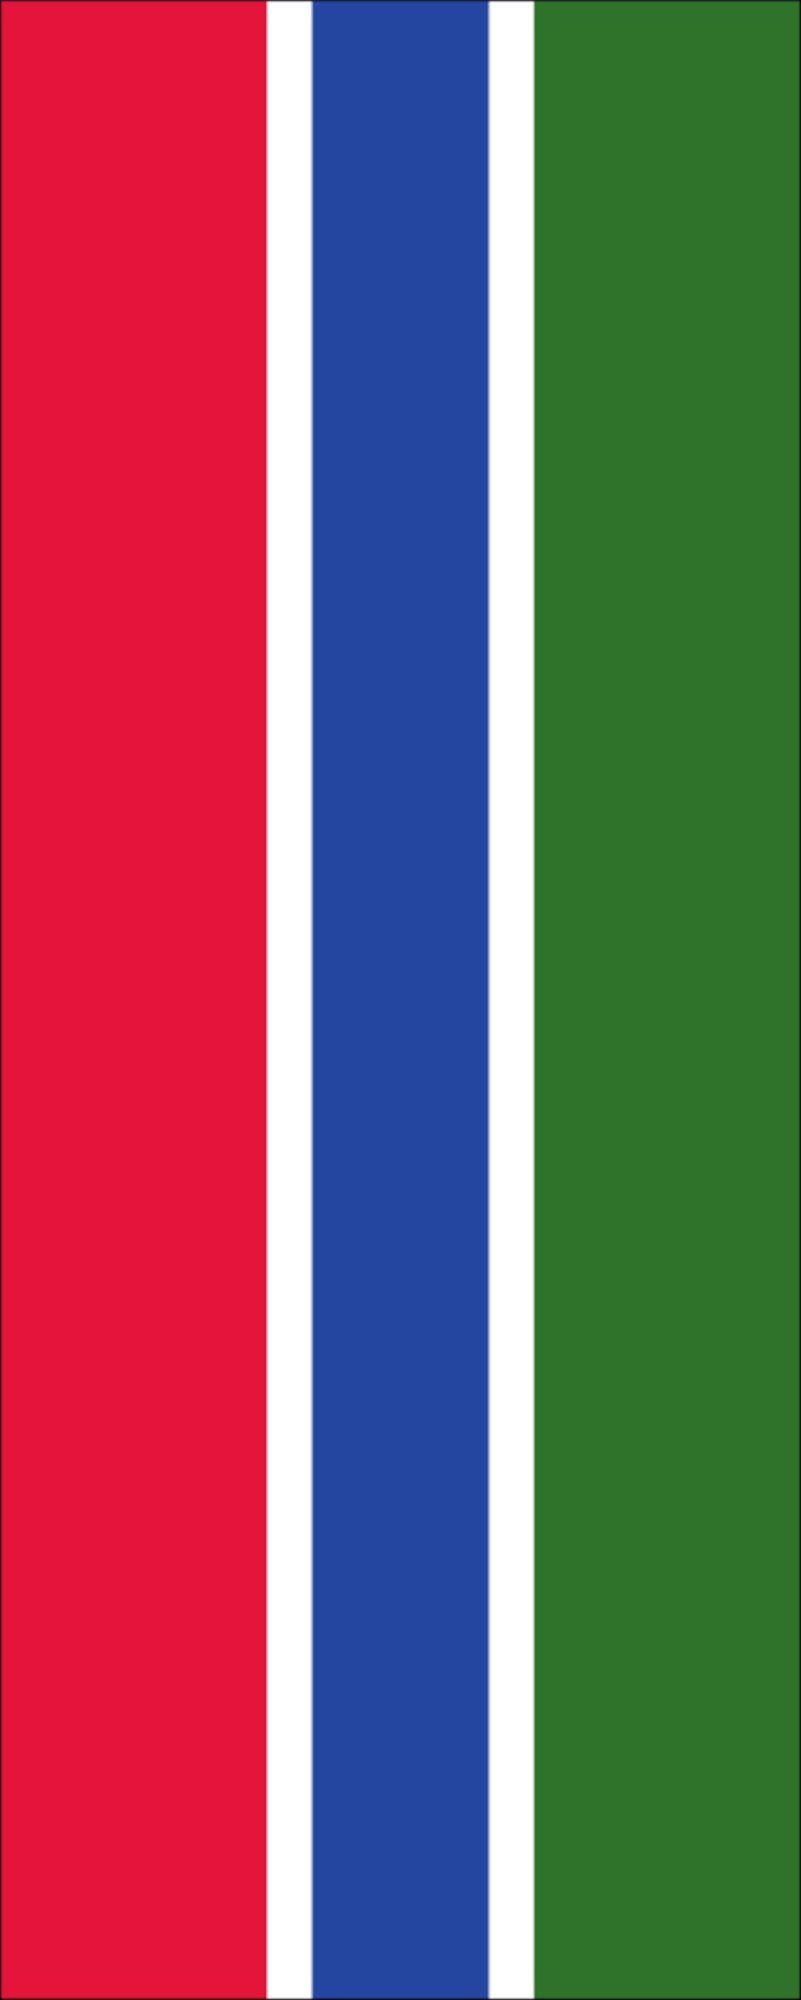 Flagge flaggenmeer g/m² Gambia Flagge Hochformat 110